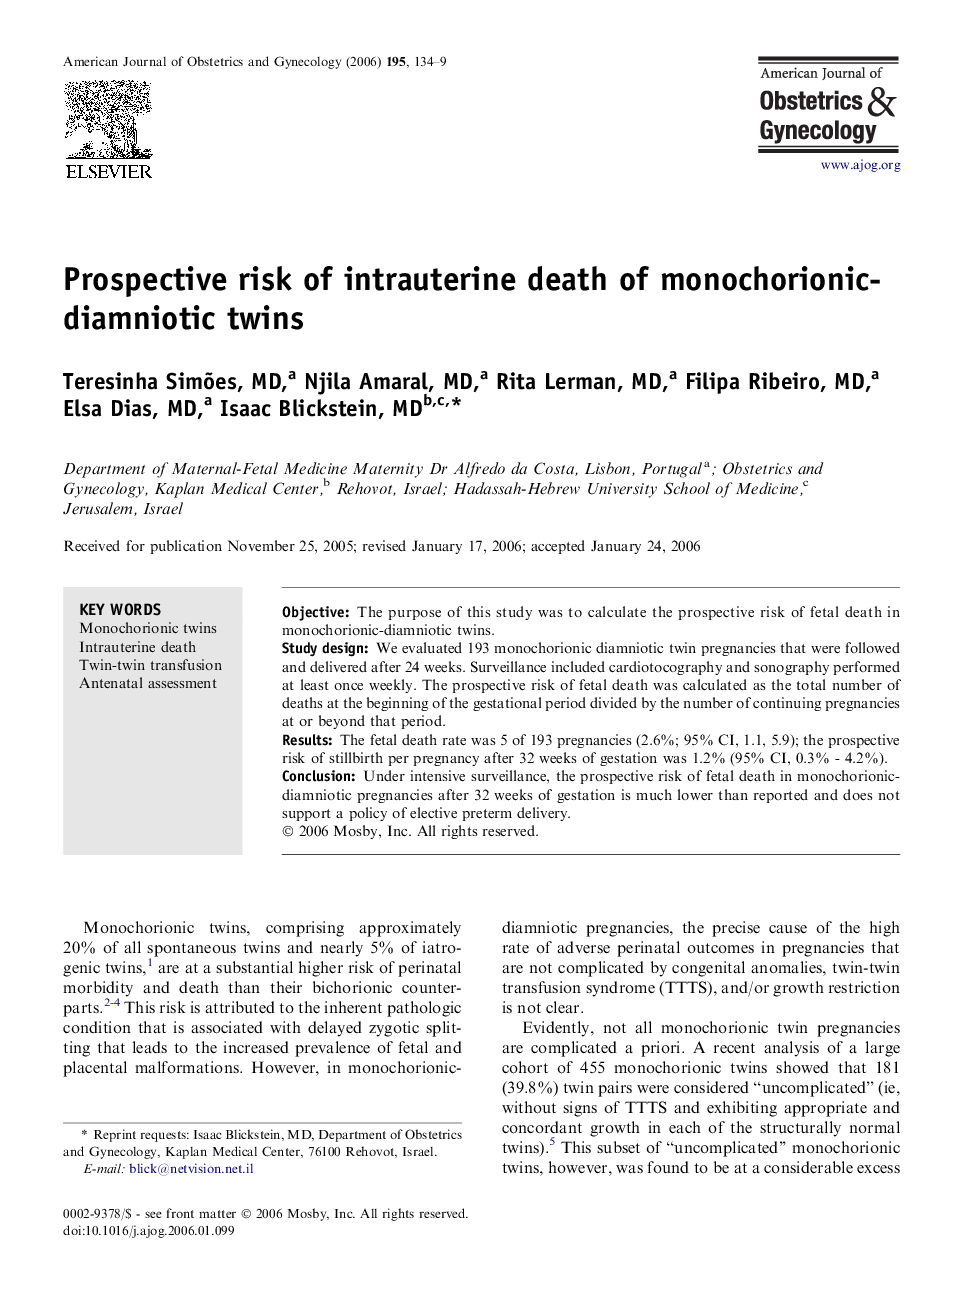 Prospective risk of intrauterine death of monochorionic-diamniotic twins